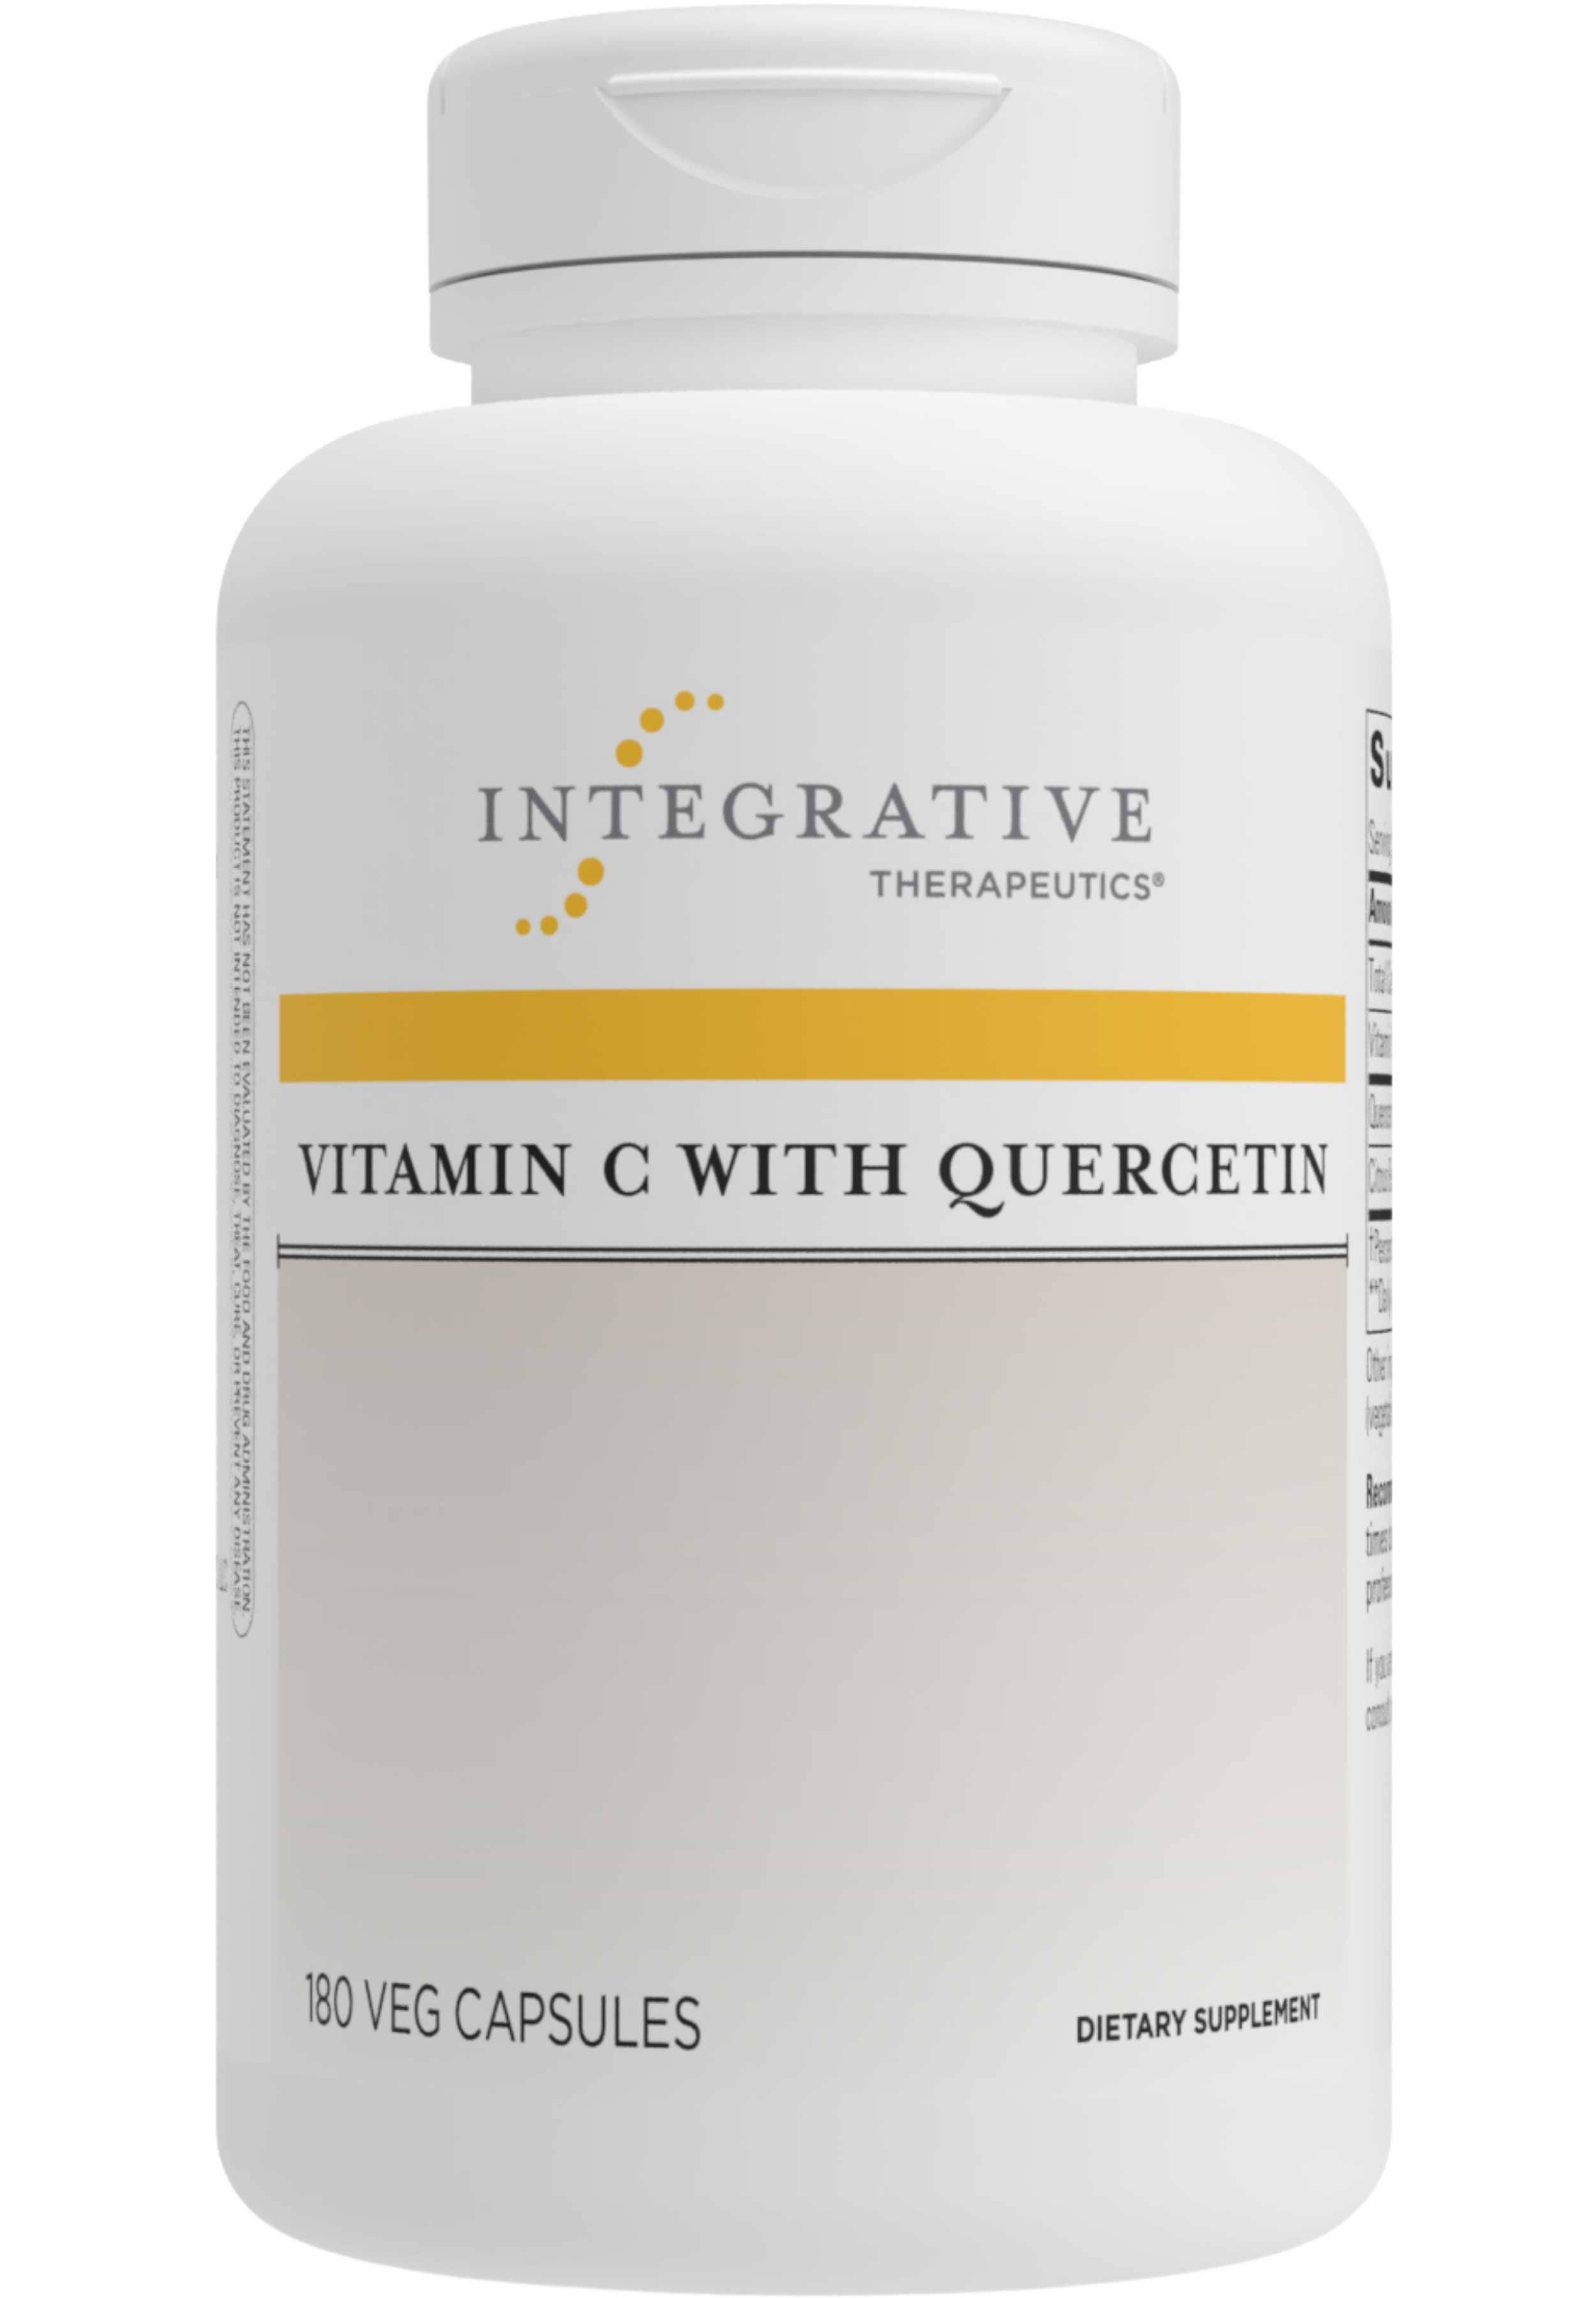 Integrative Therapeutics - Vitamin C with Quercetin - Supplement for